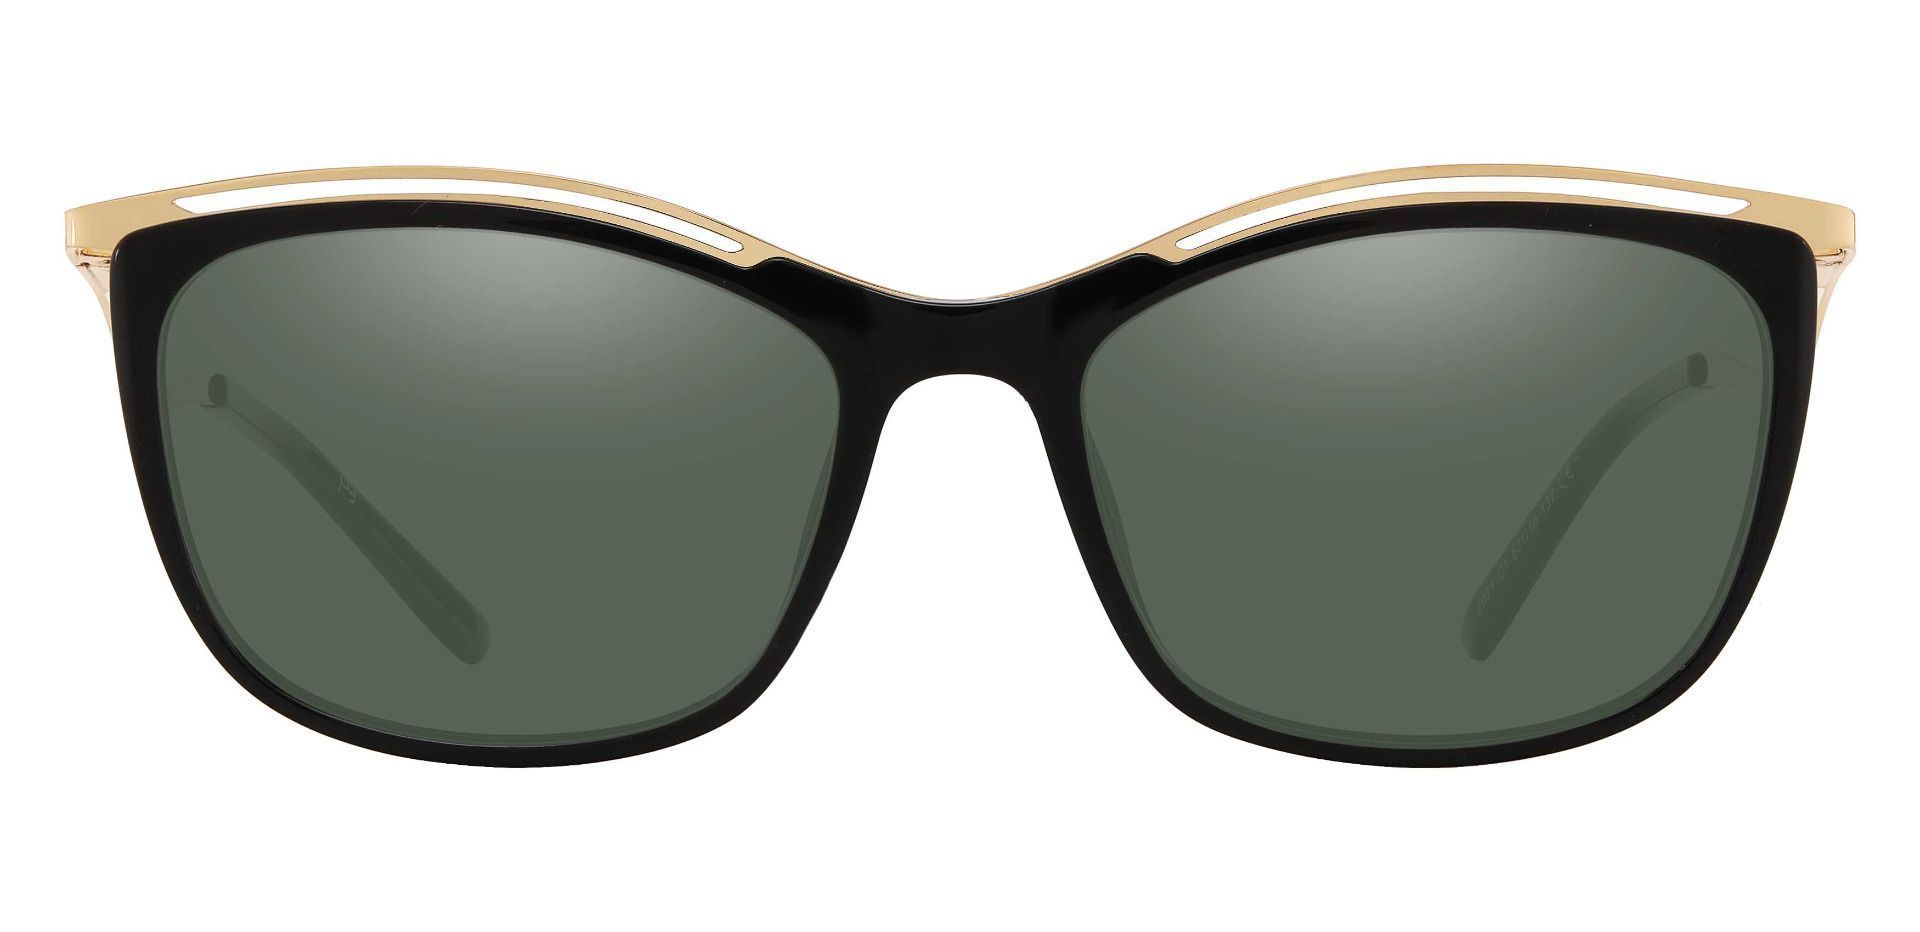 Enola Cat Eye Prescription Sunglasses - Black Frame With Green Lenses